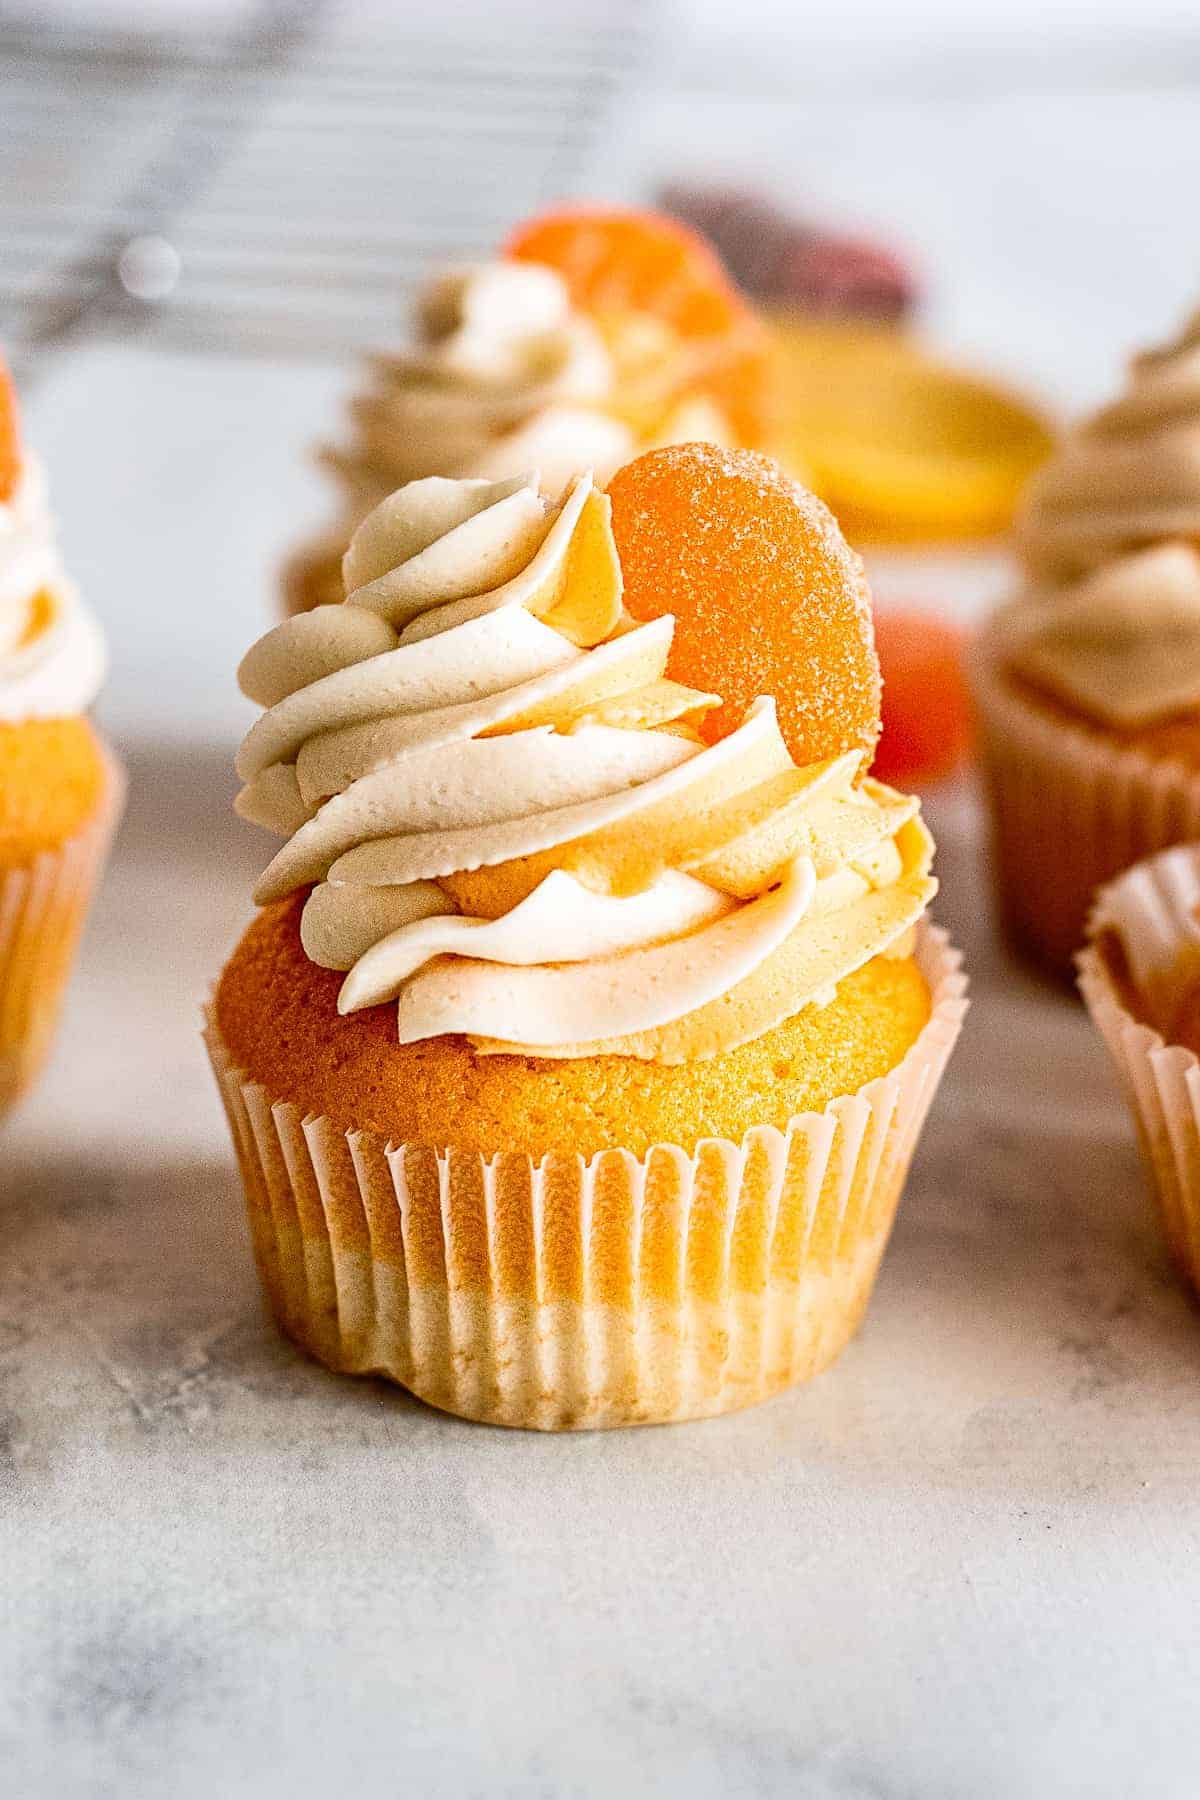 Orange Creamsicle Cupcakes with Cream Filling - Easy Dessert Recipes